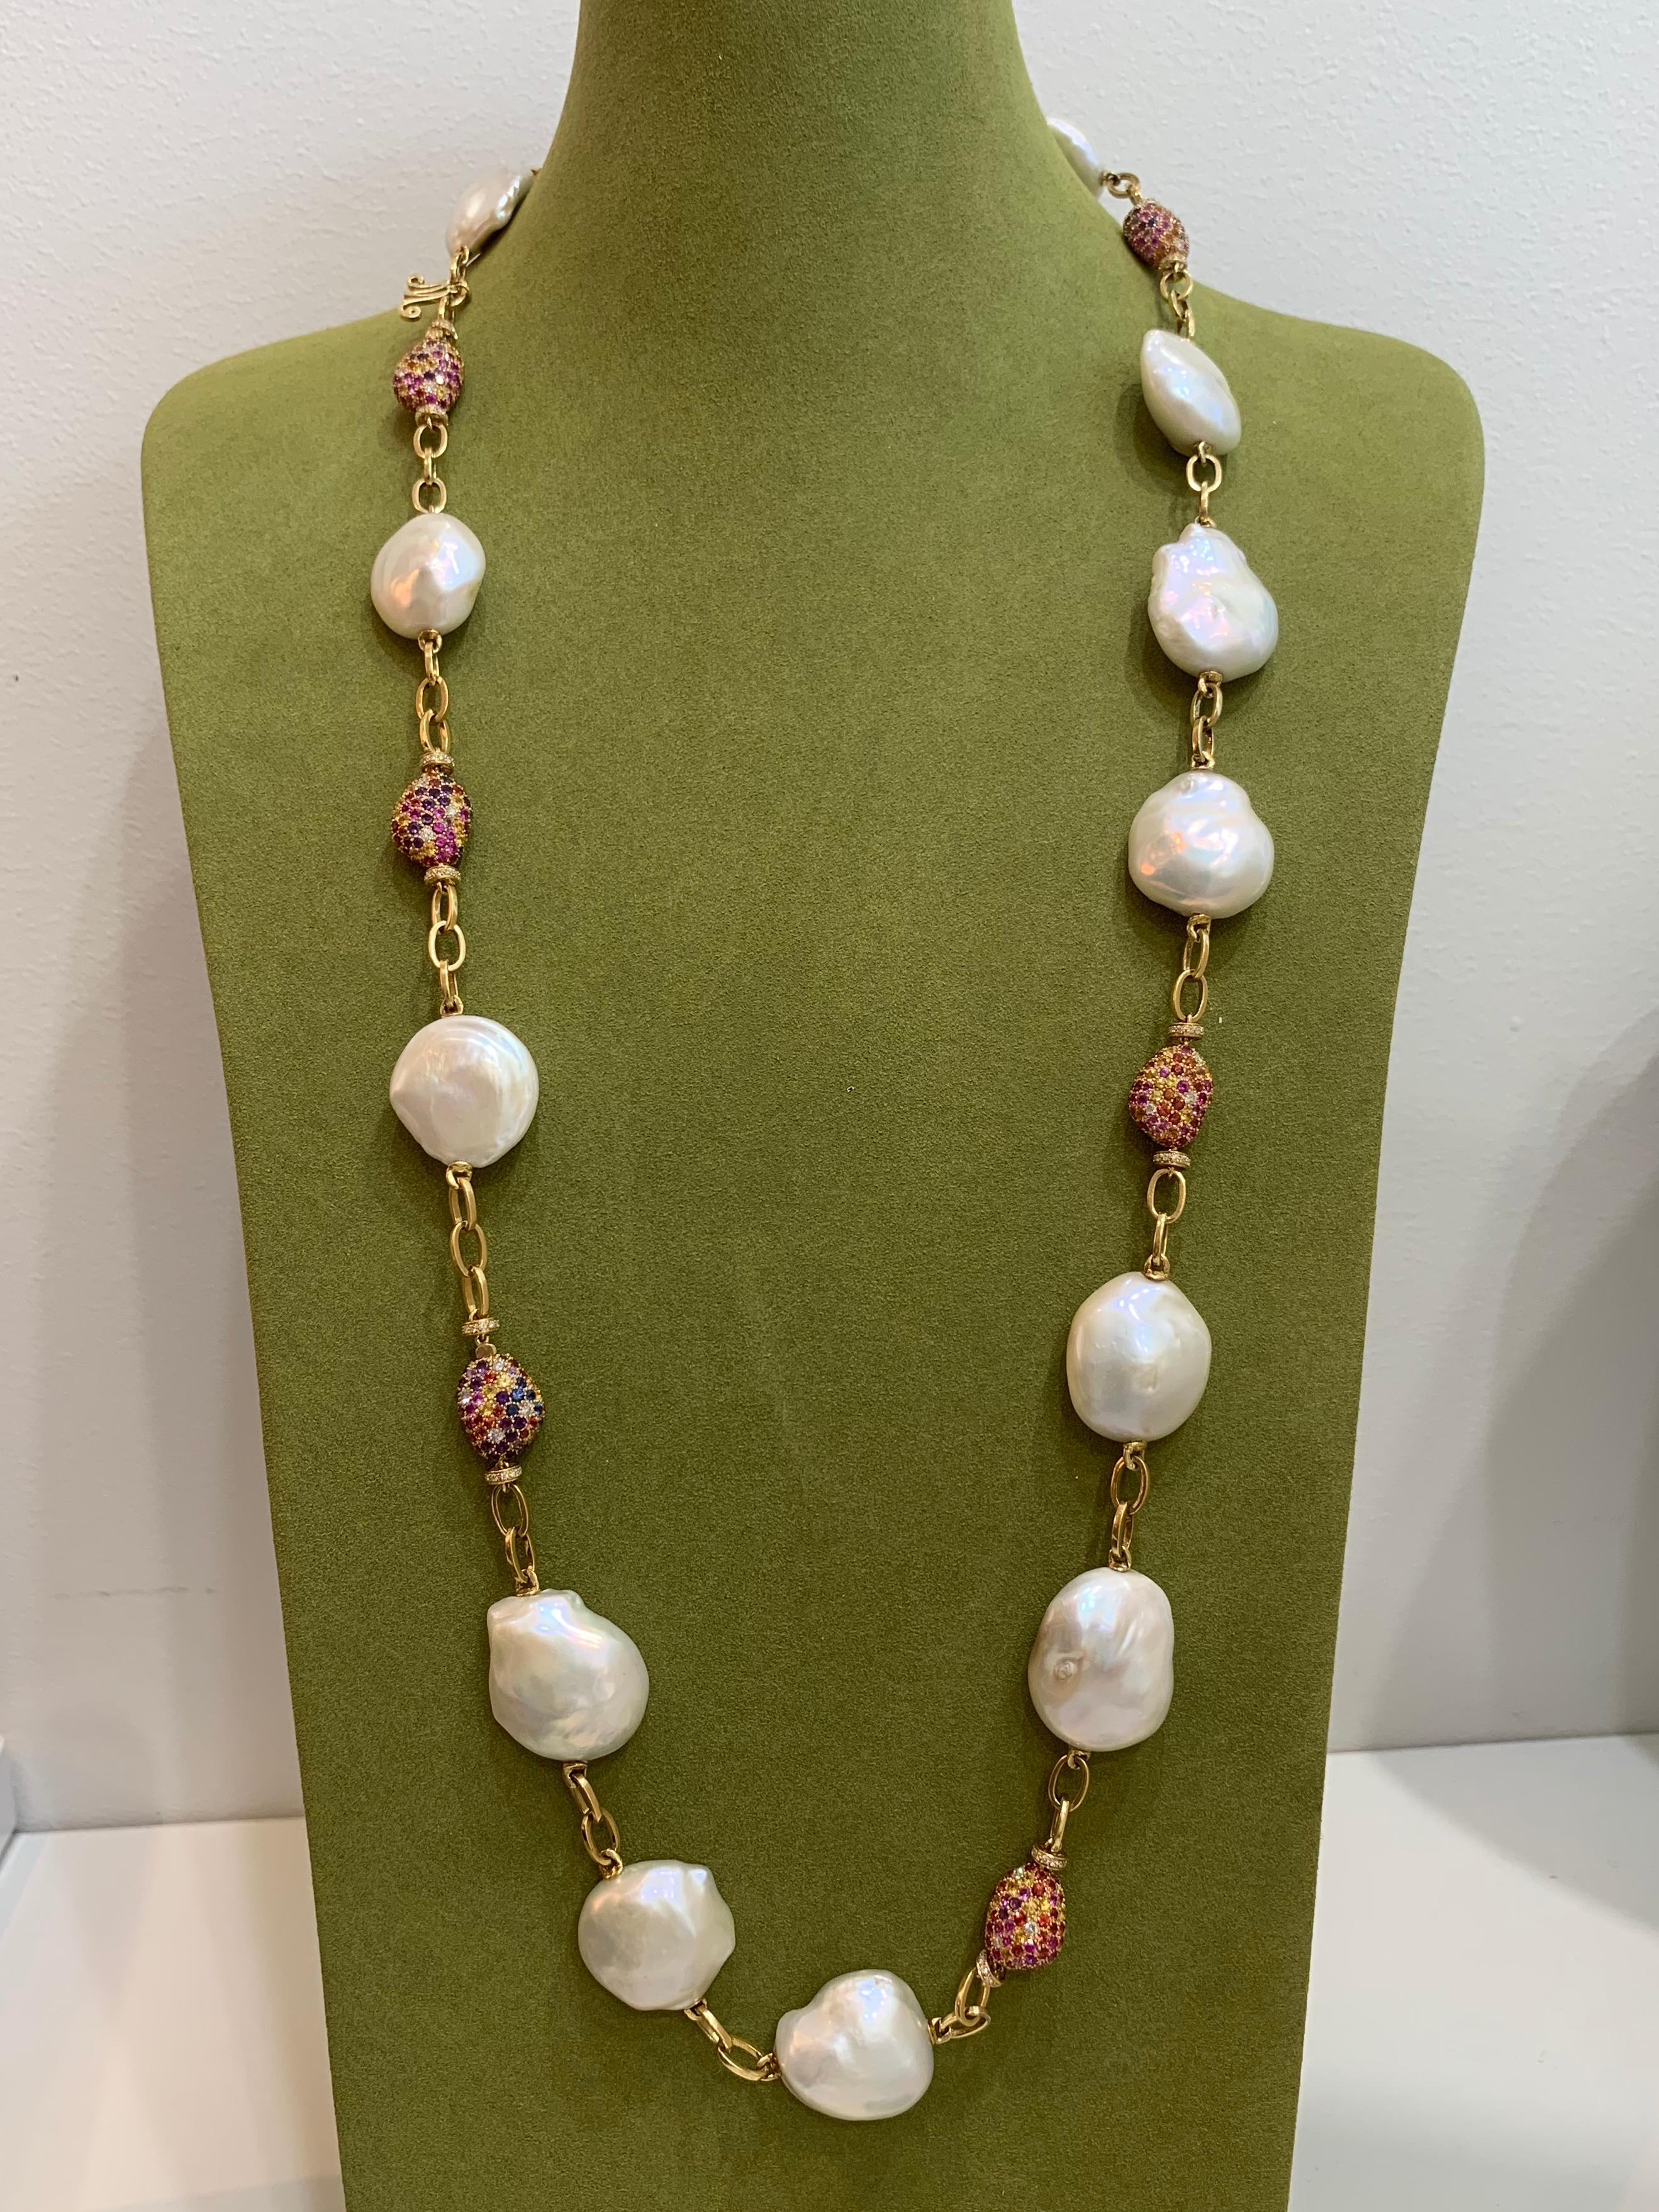 Women's Margot McKinney 18K Gold Necklace of Baroque Pearls/Diamonds/Sapphires/Amethyst